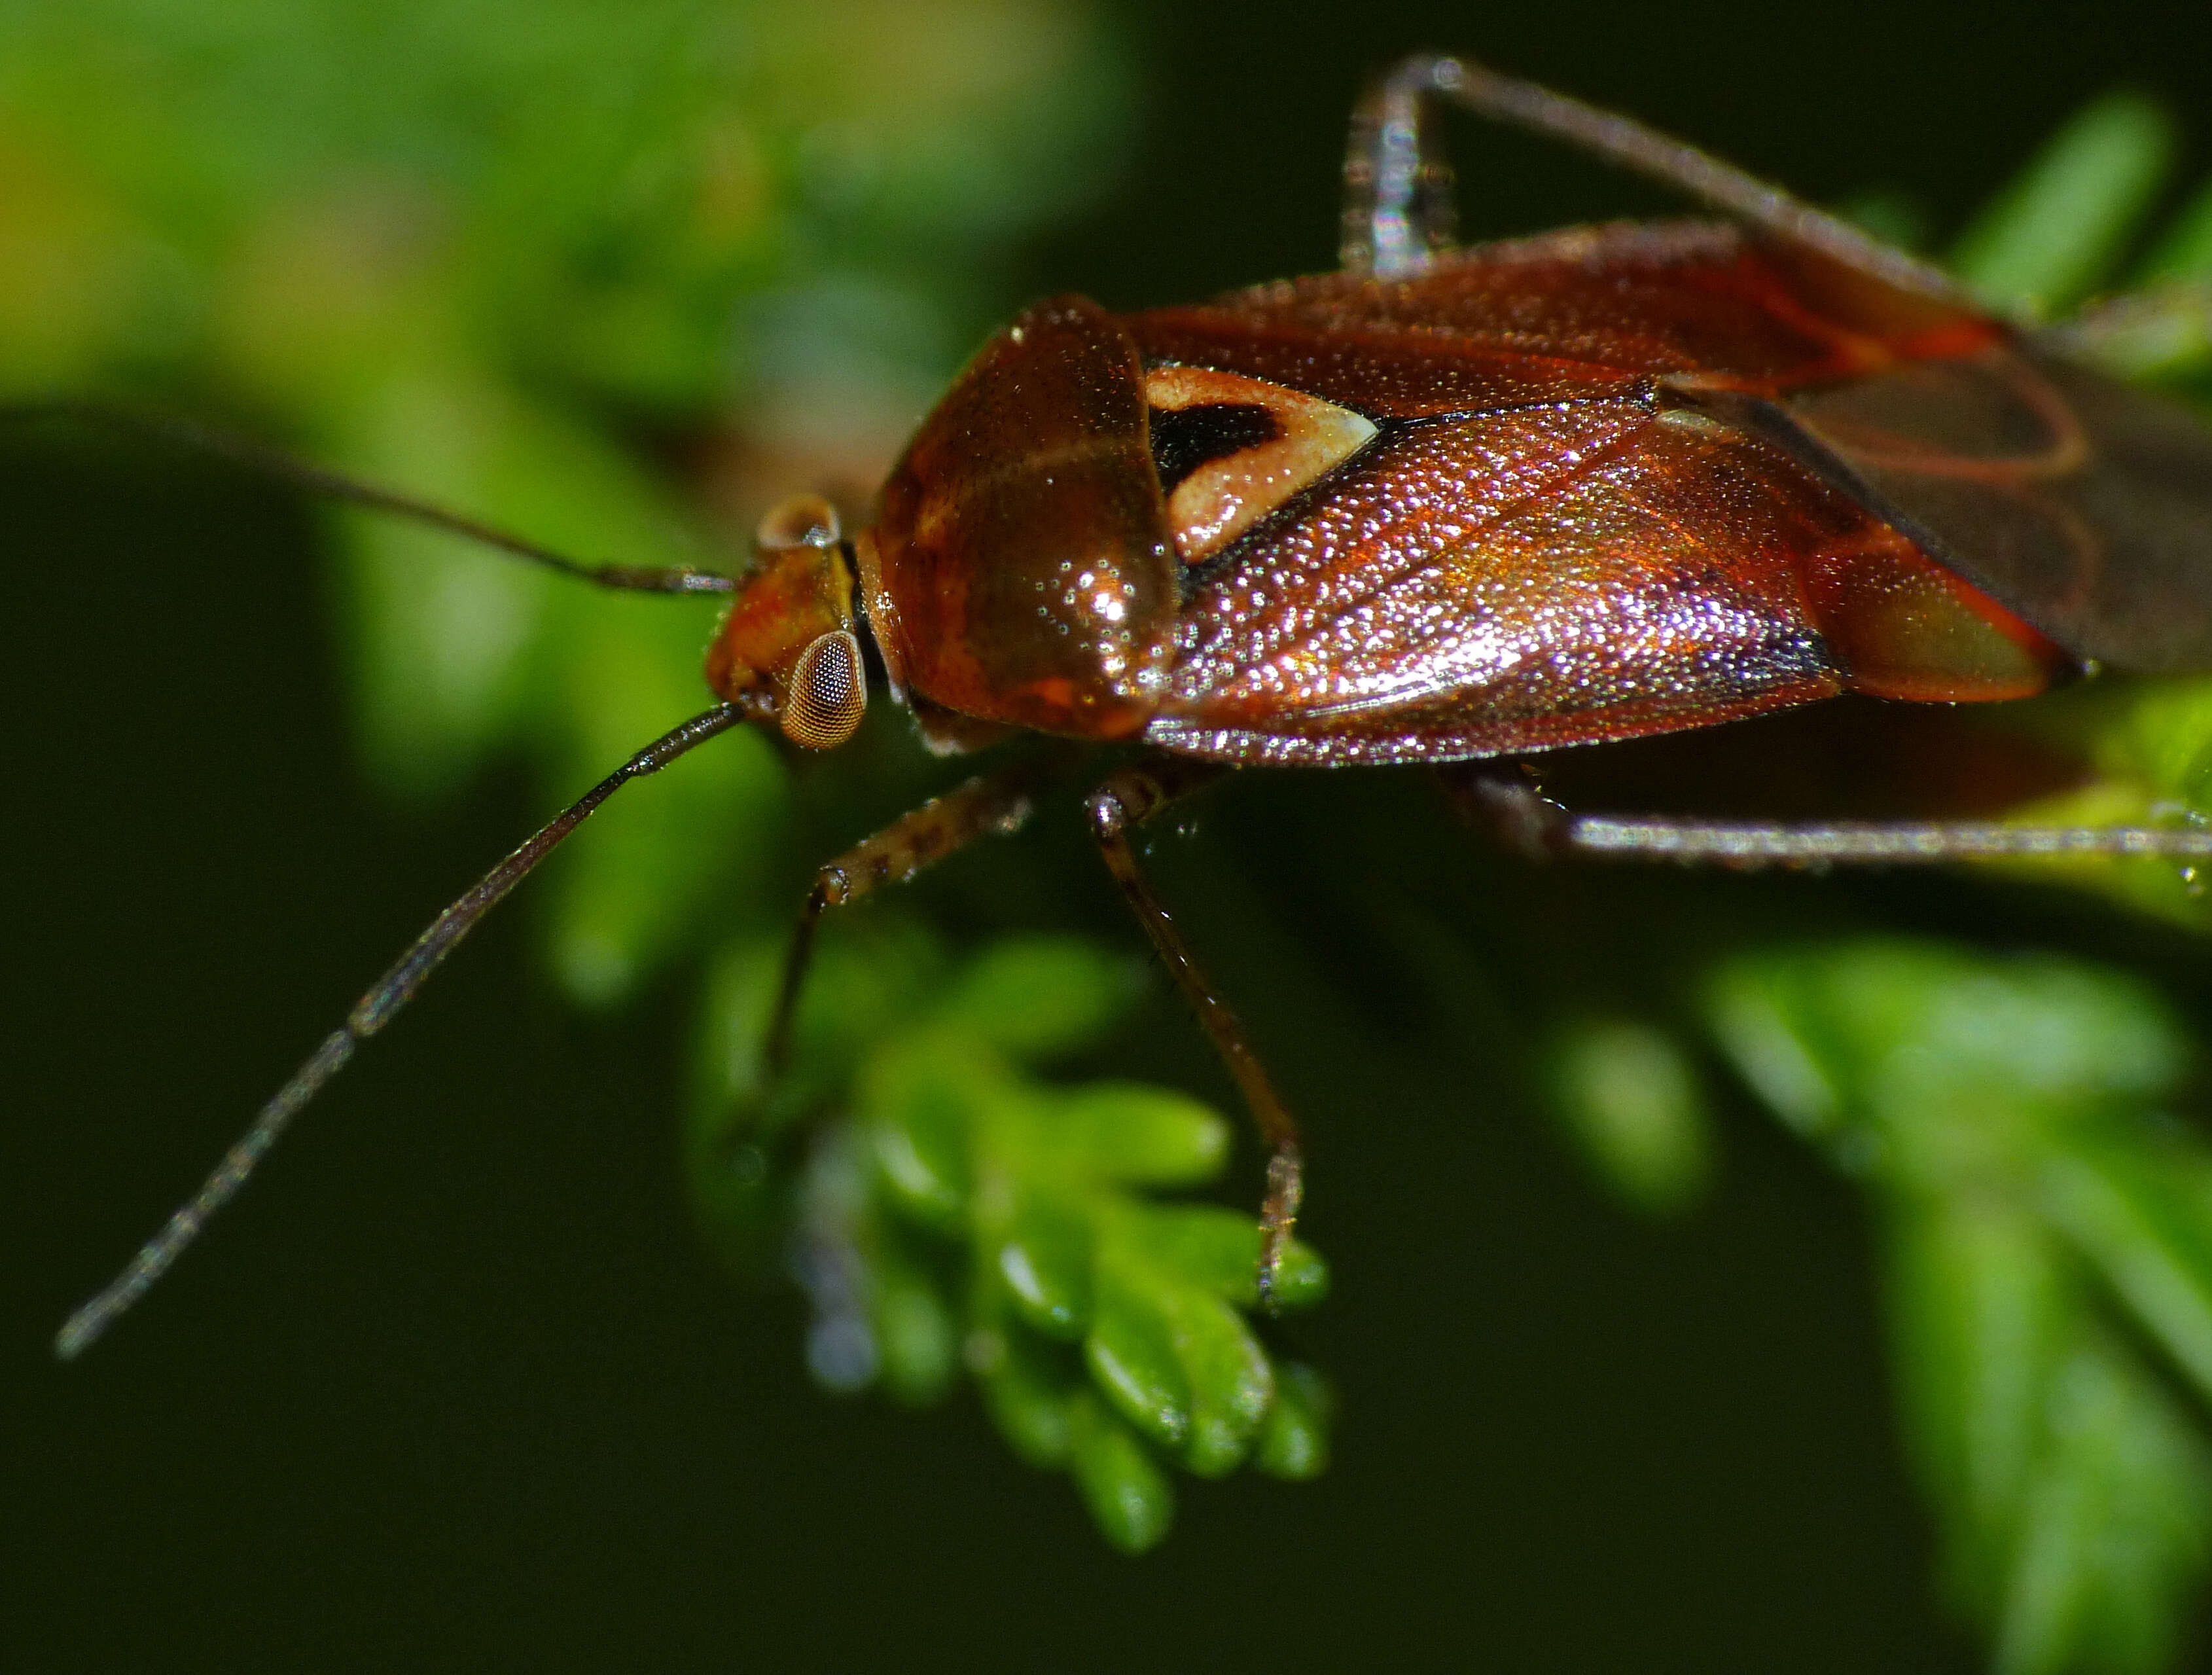 Image of Lygus Bugs